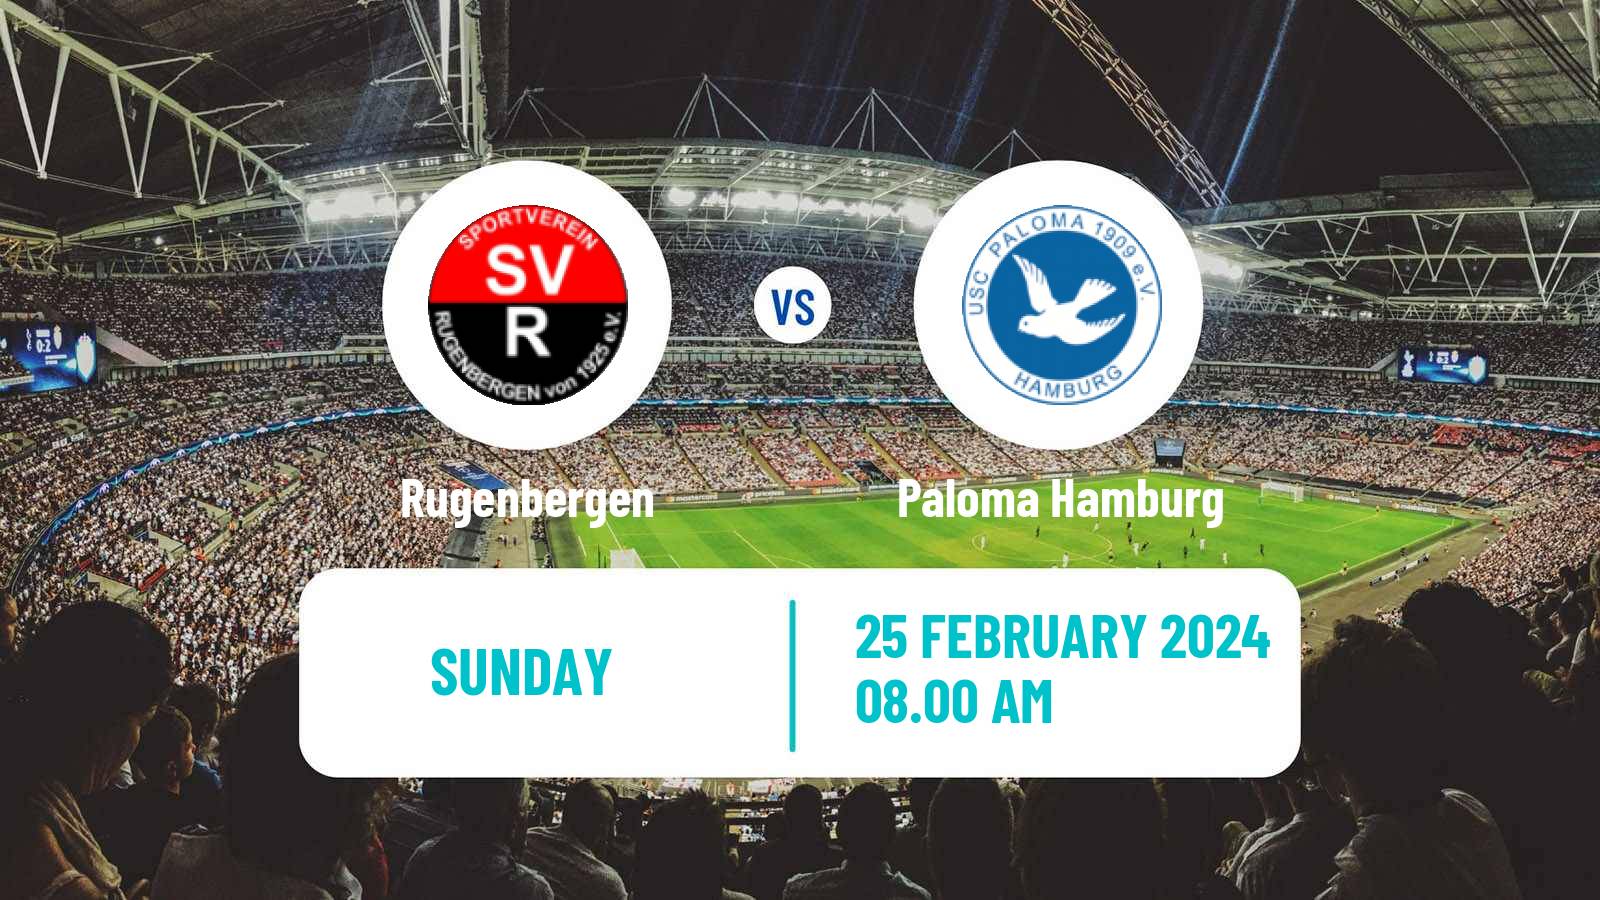 Soccer German Oberliga Hamburg Rugenbergen - Paloma Hamburg